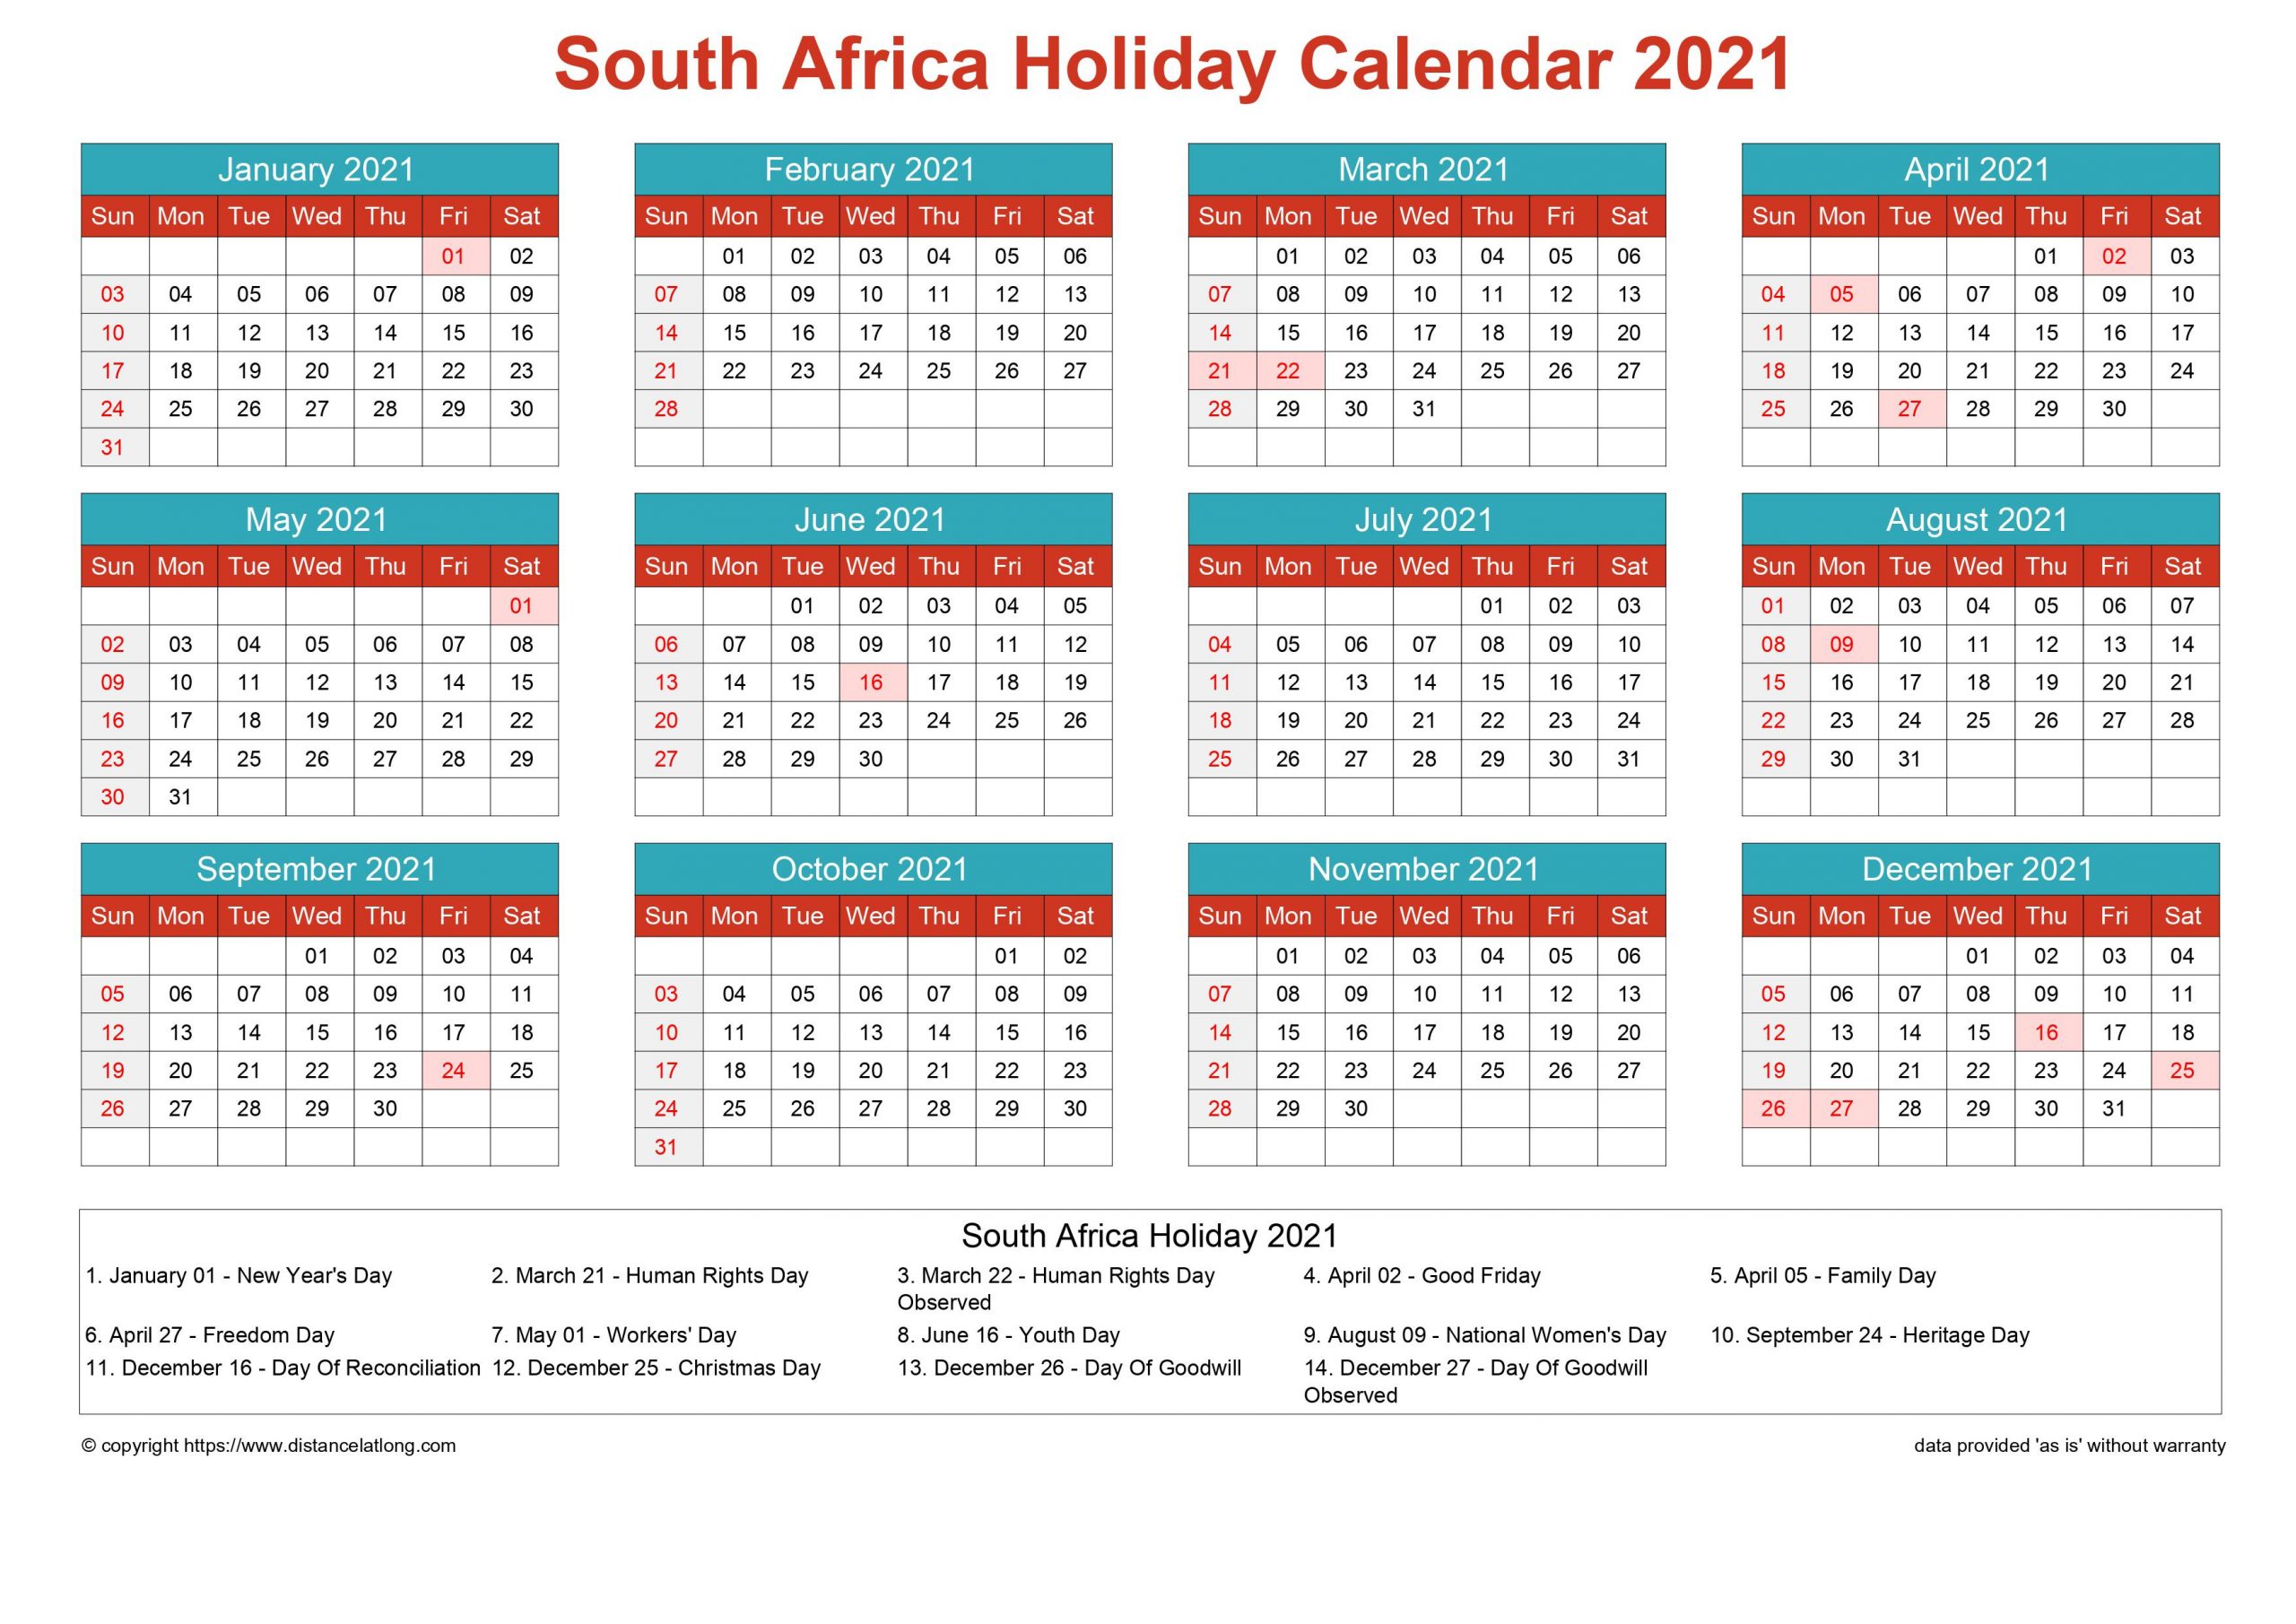 See Also: November 2021 Calendar South Africa